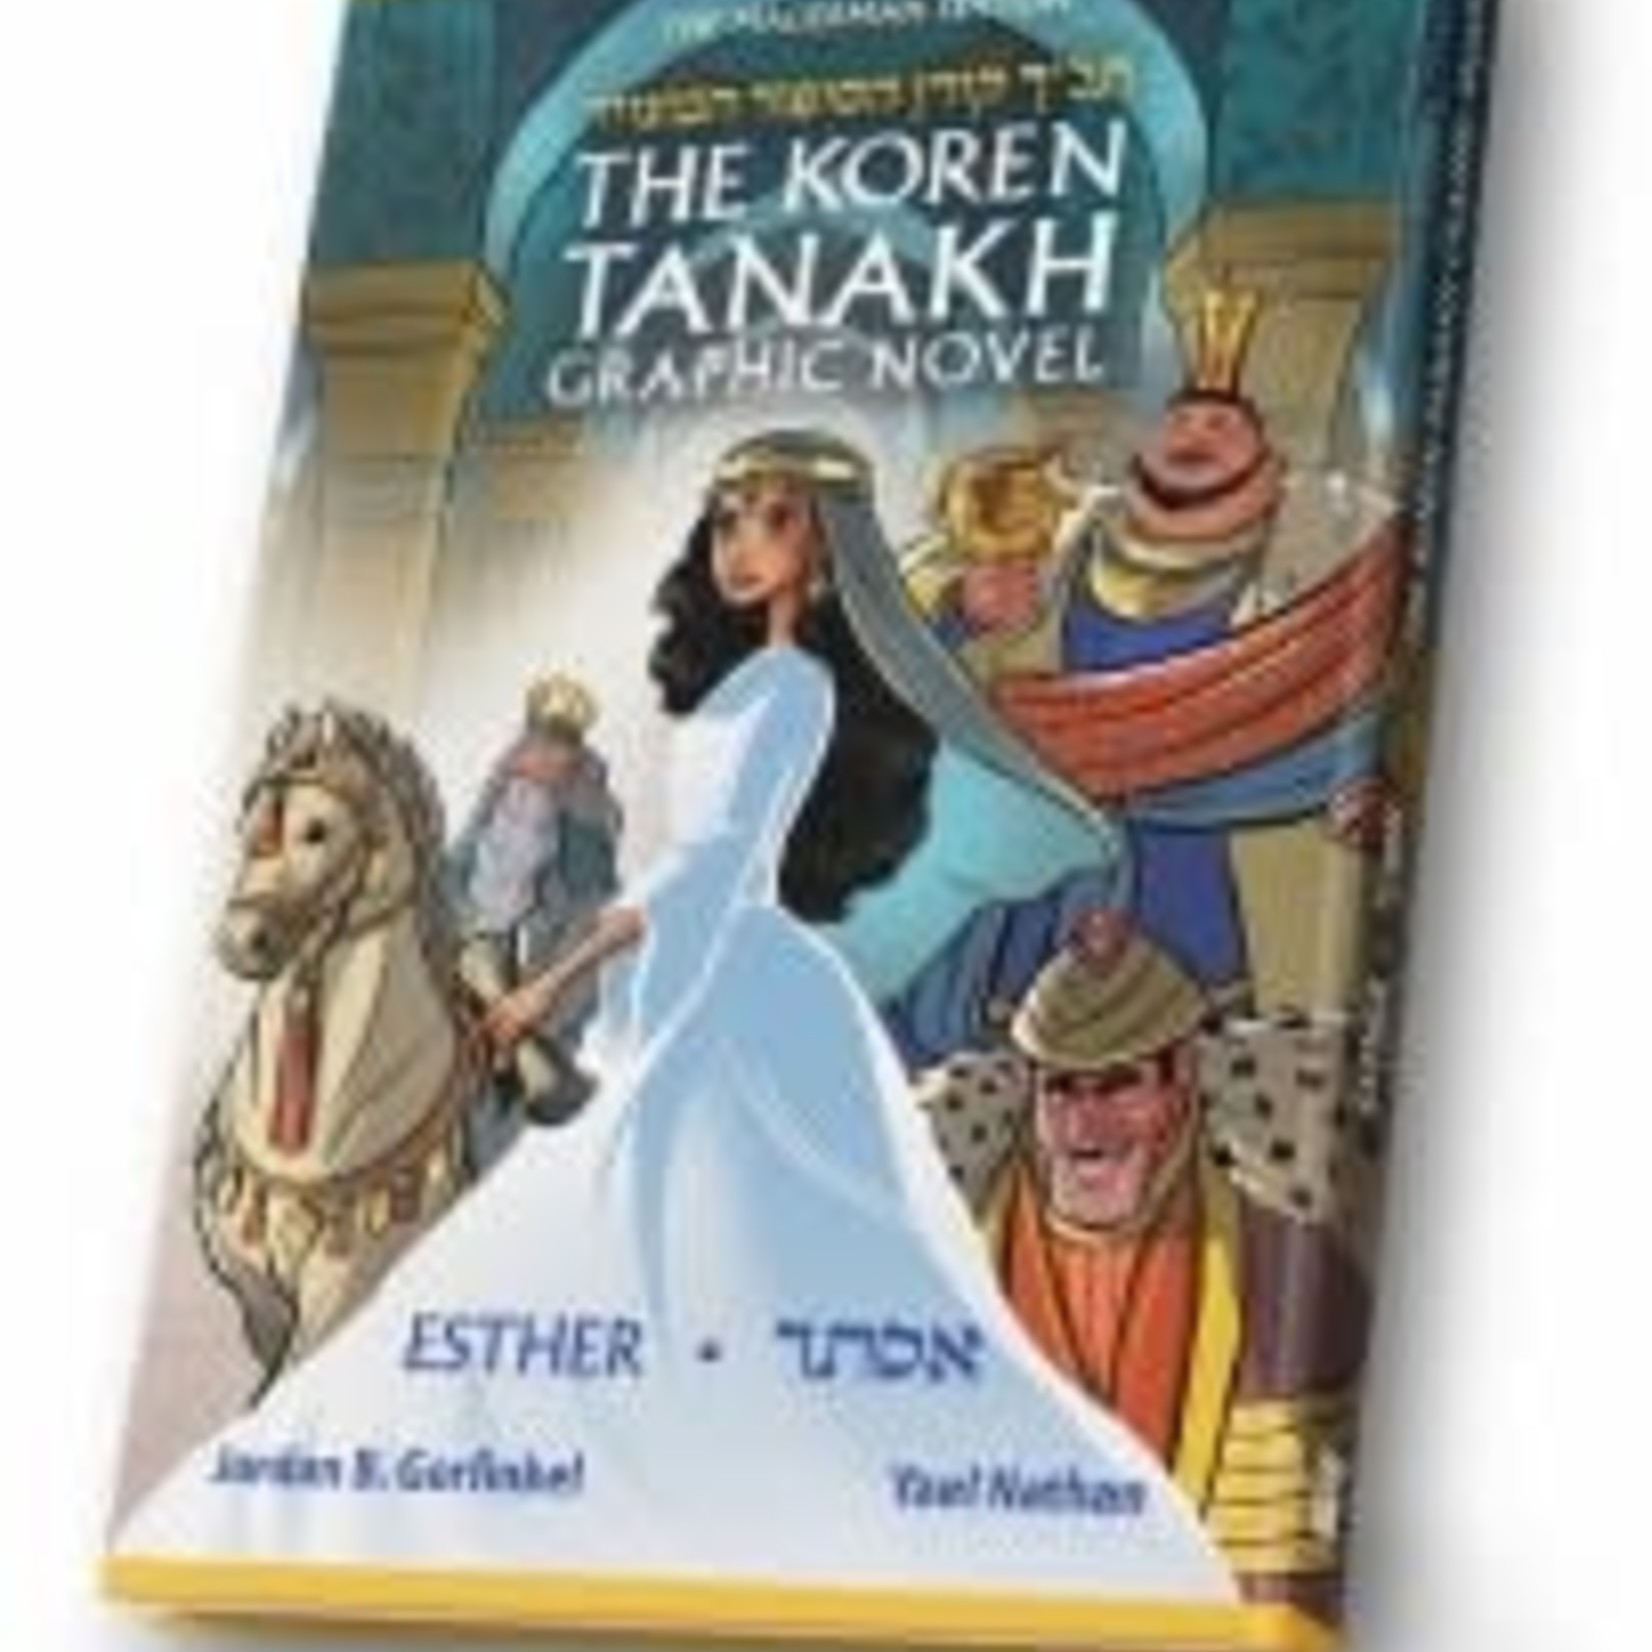 The Koren Tanakh Graphic Novel - Esther (Hebrew/English)